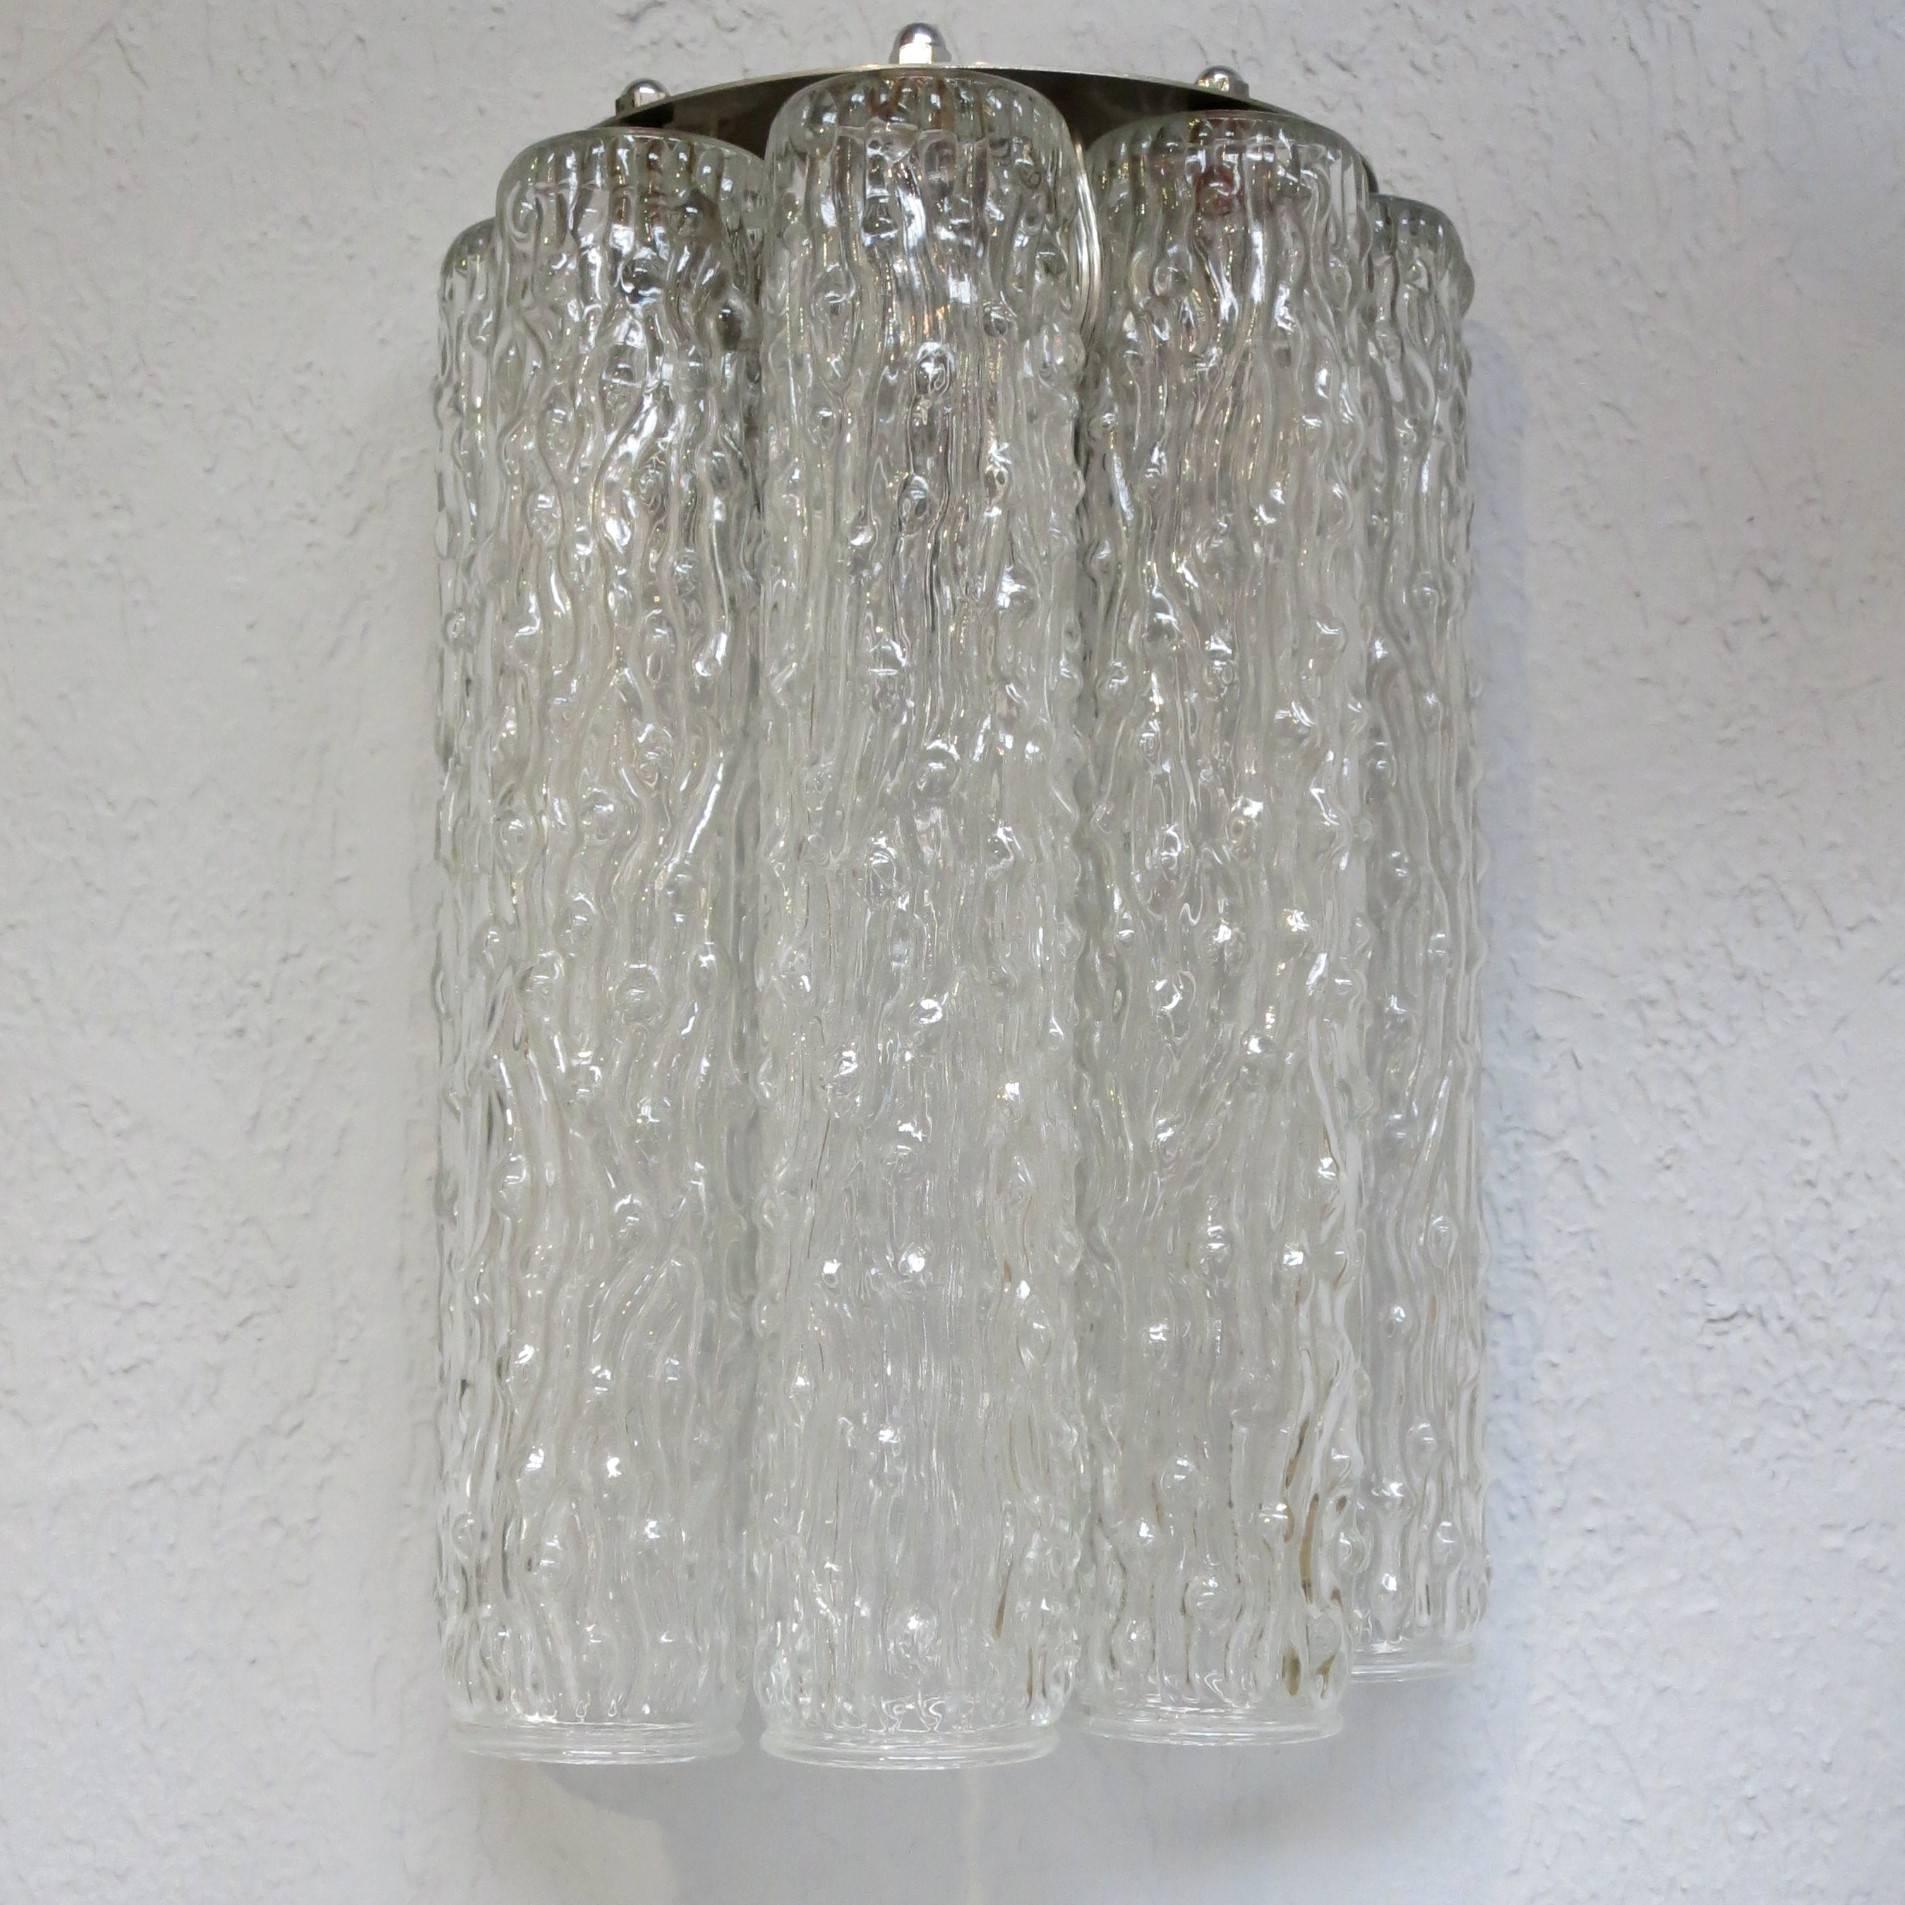 Clear Corteccia Murano glass tubes on chrome frames
1 light / max 40W each